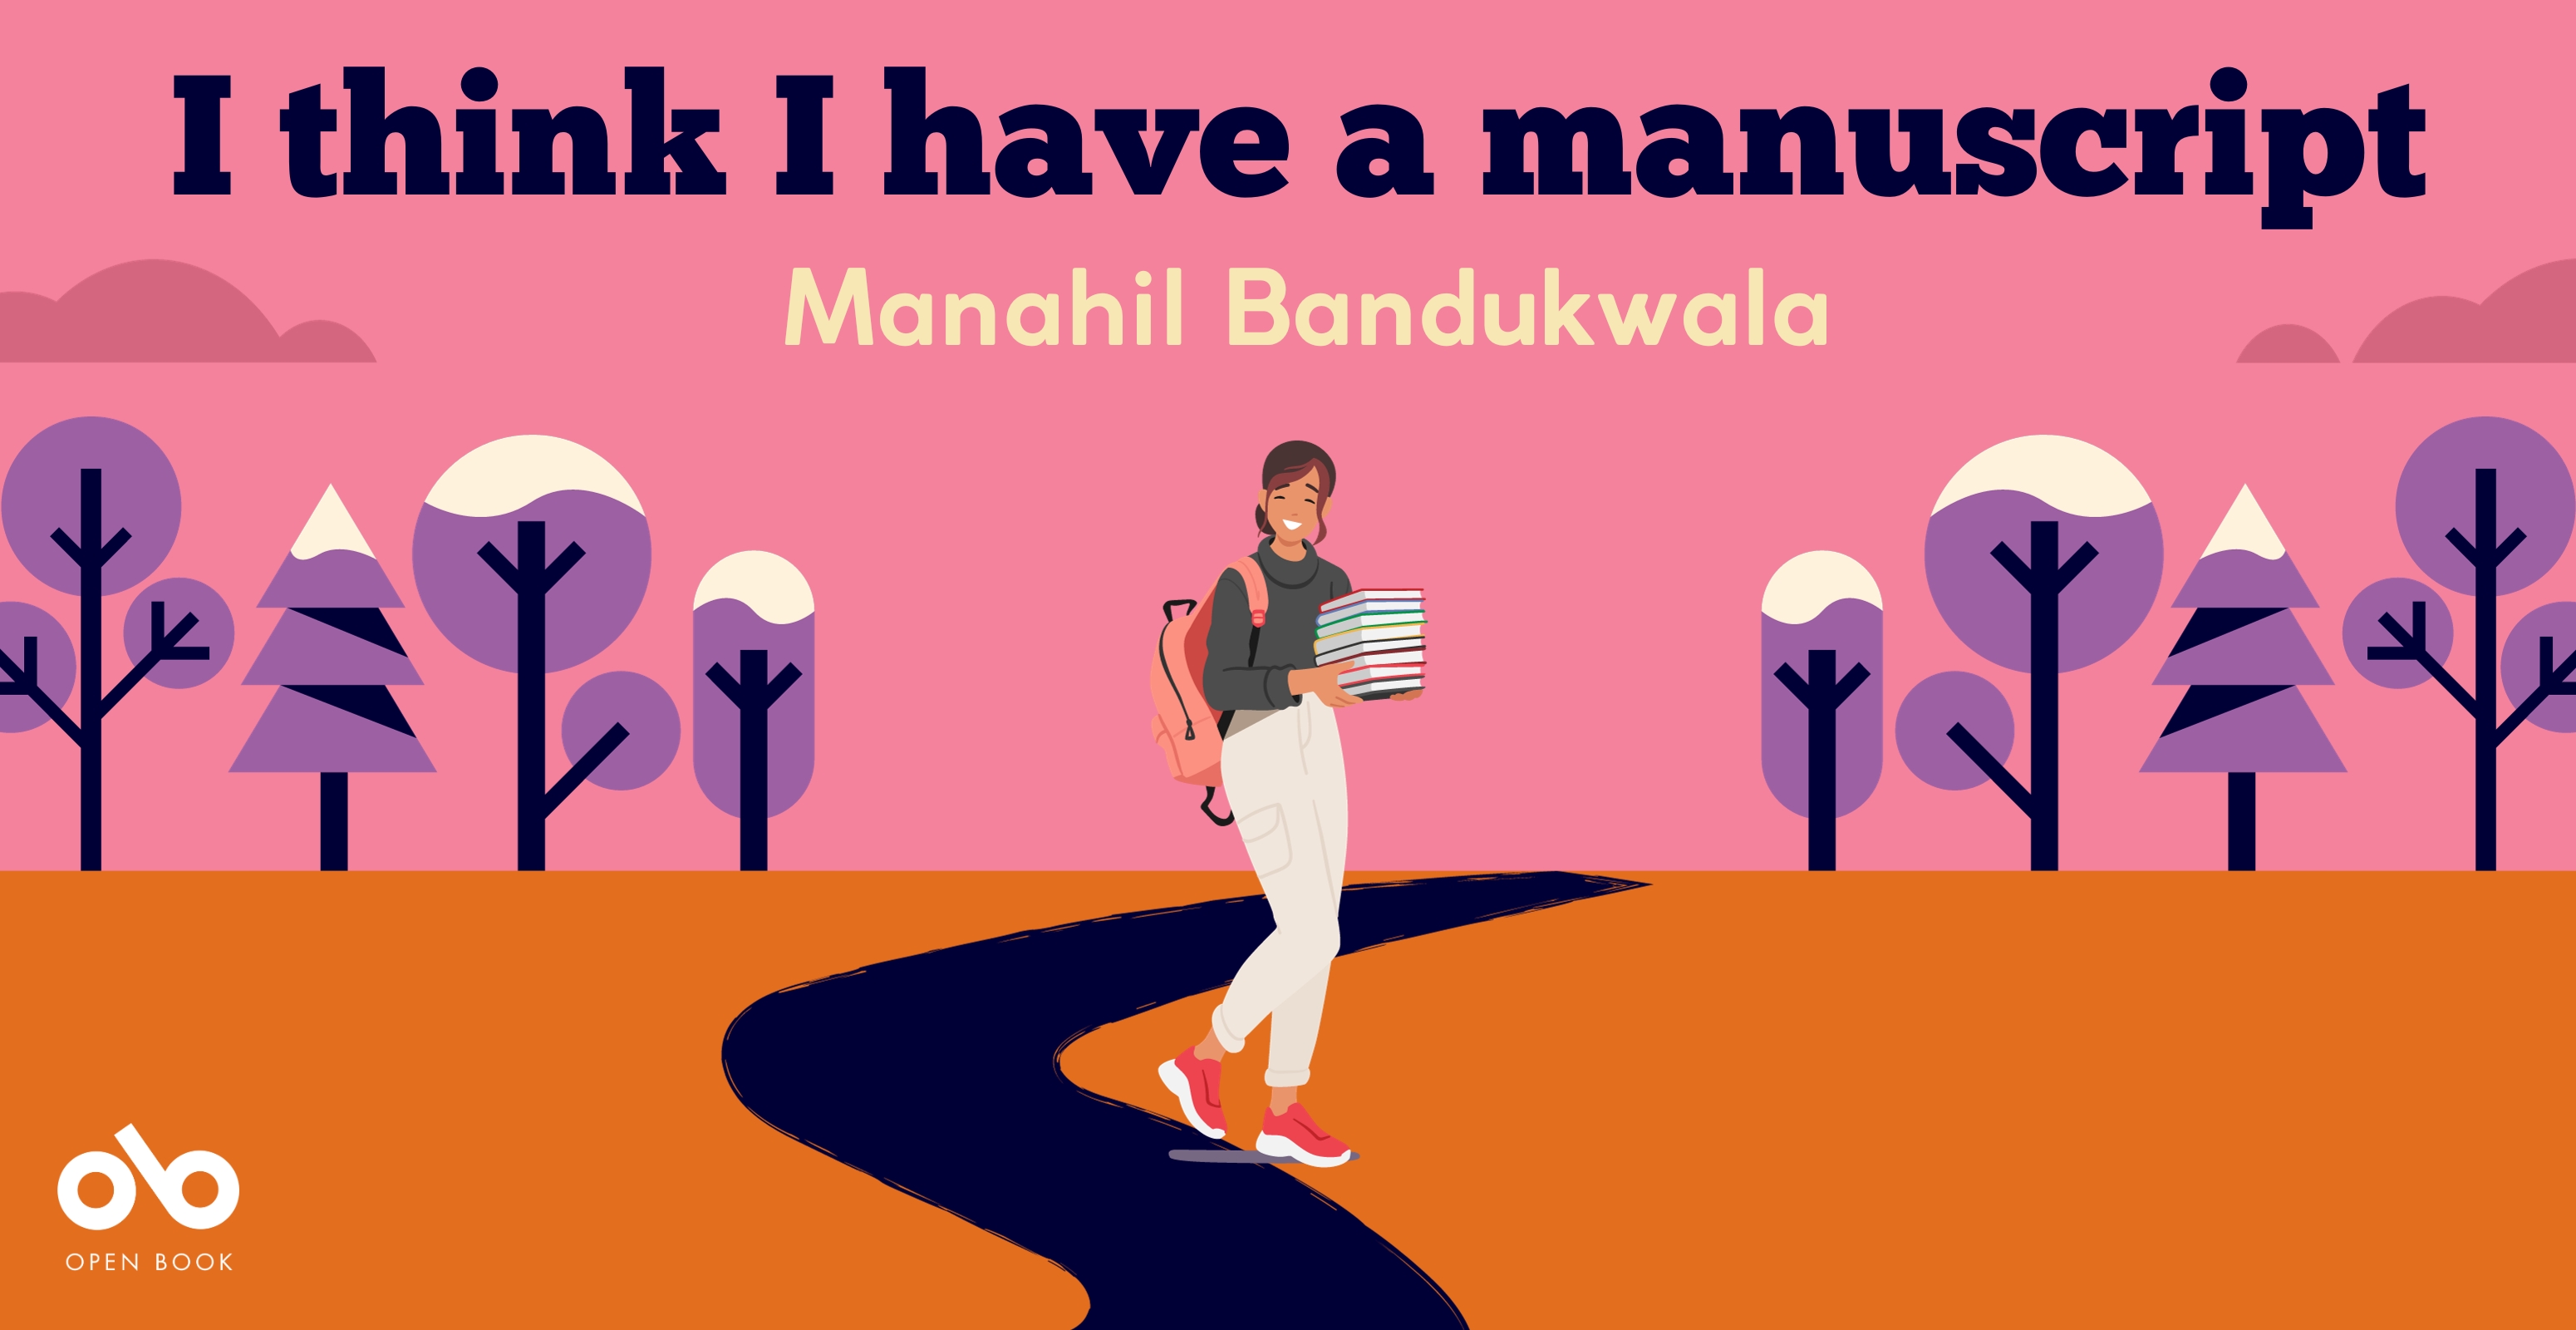 I think I have a manuscript by Manahil Bandukwala